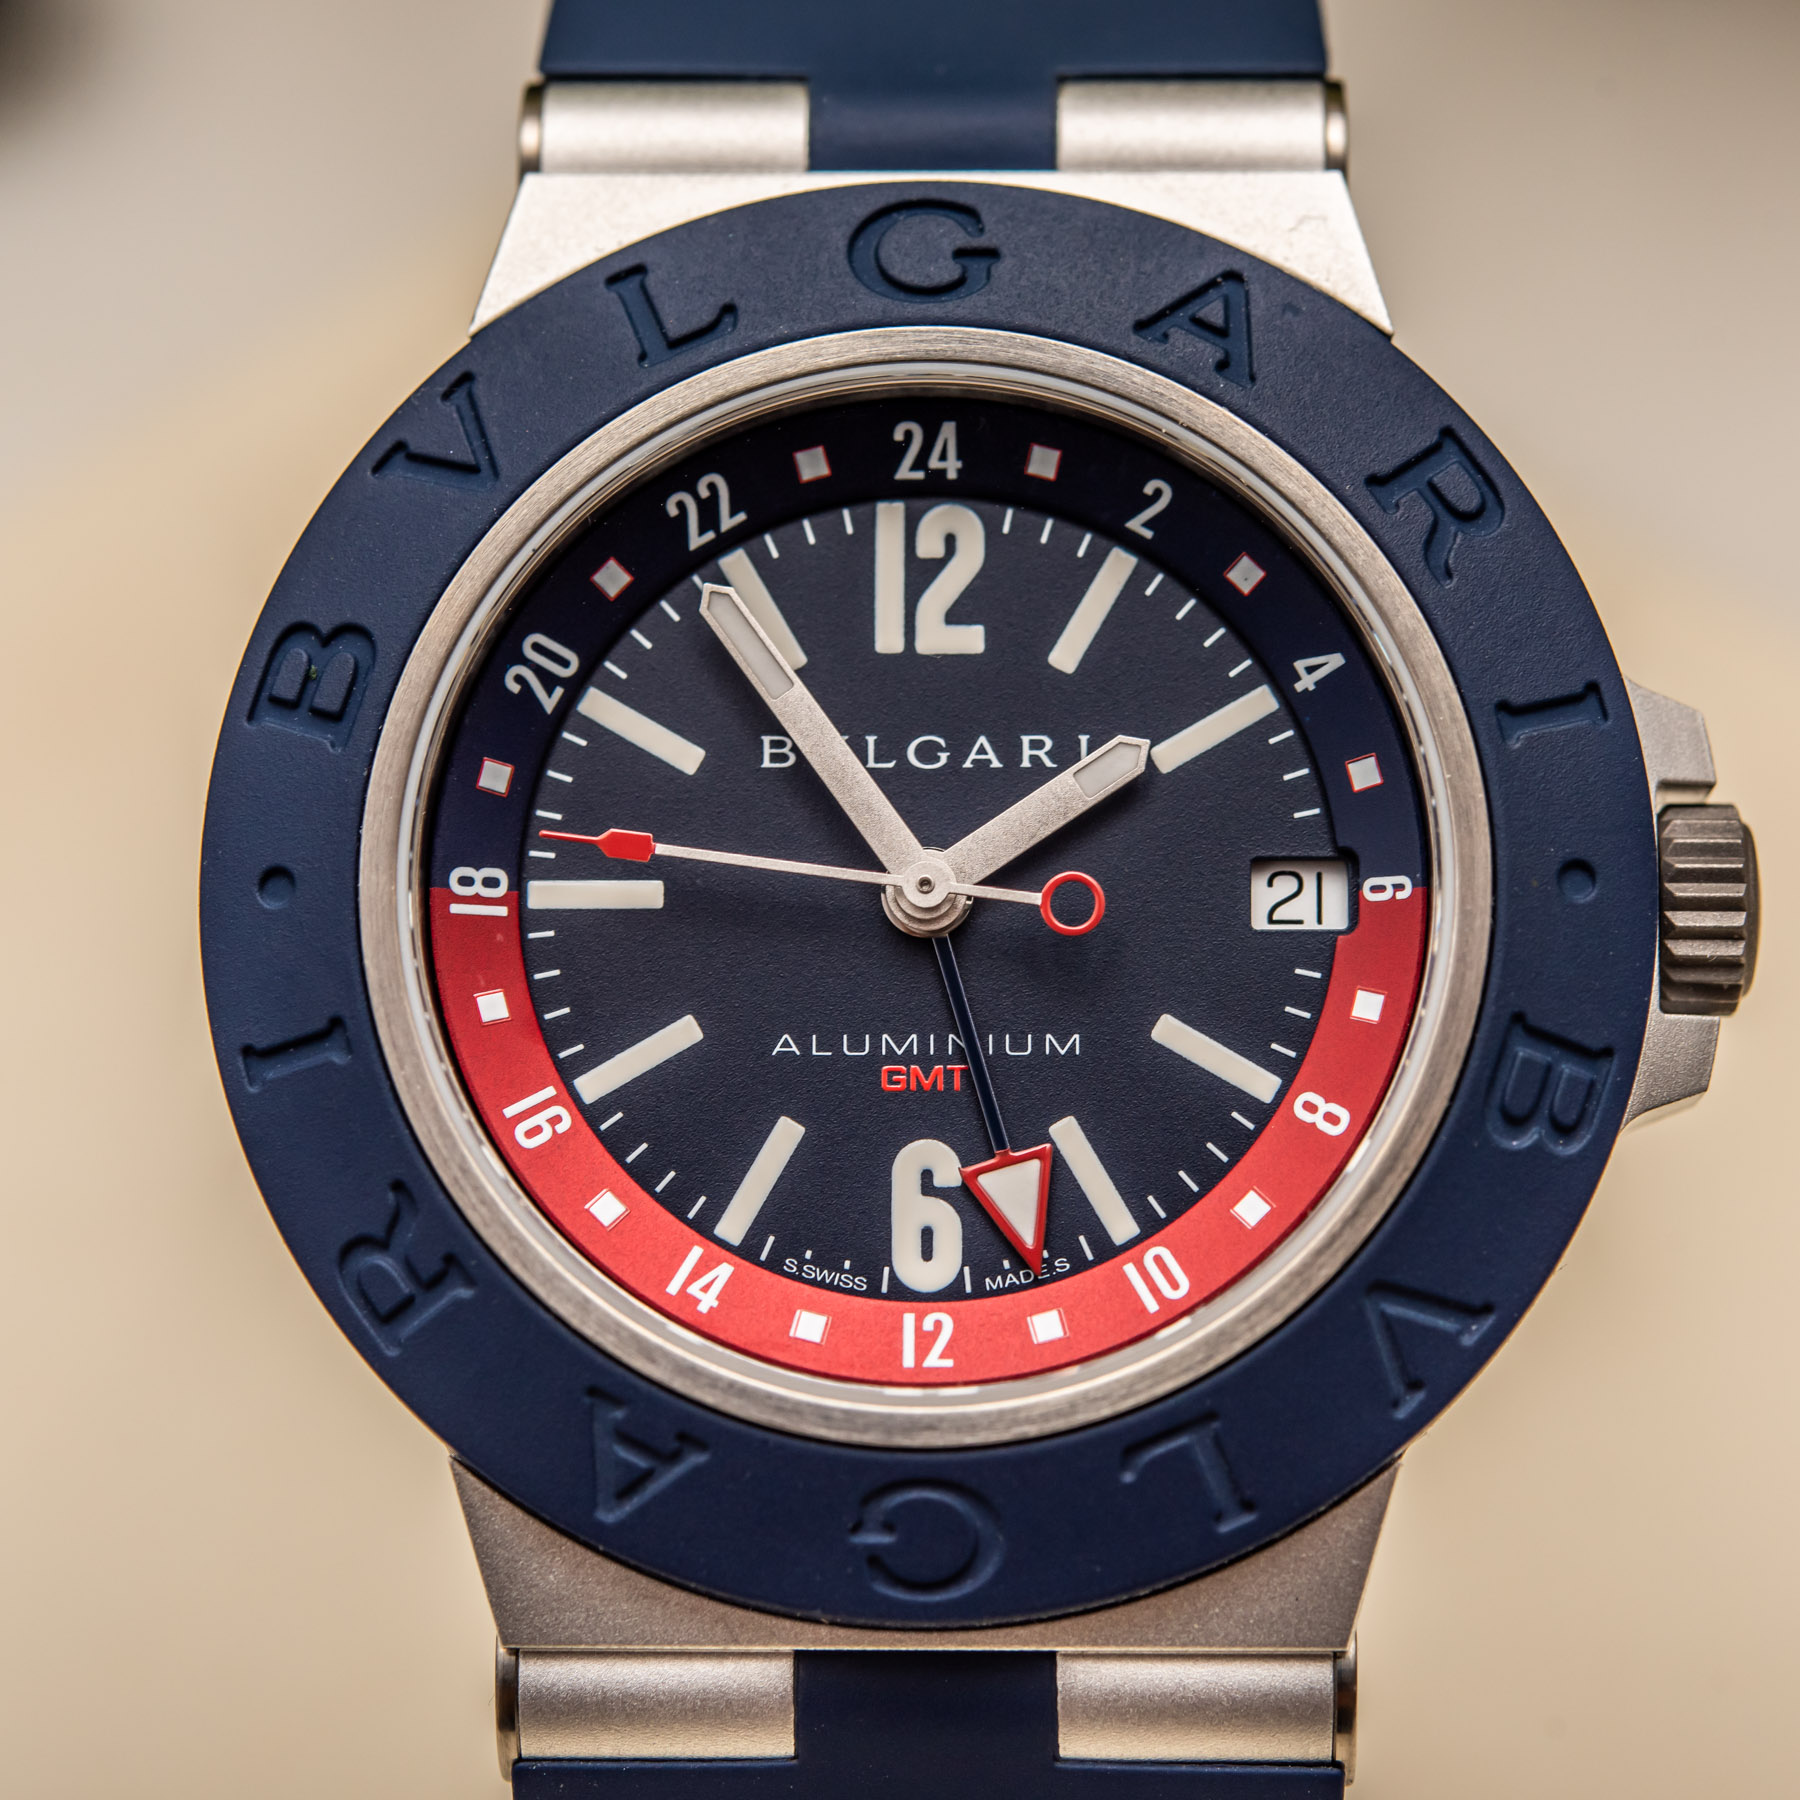 Часы от BVLGARI Aluminium GMT